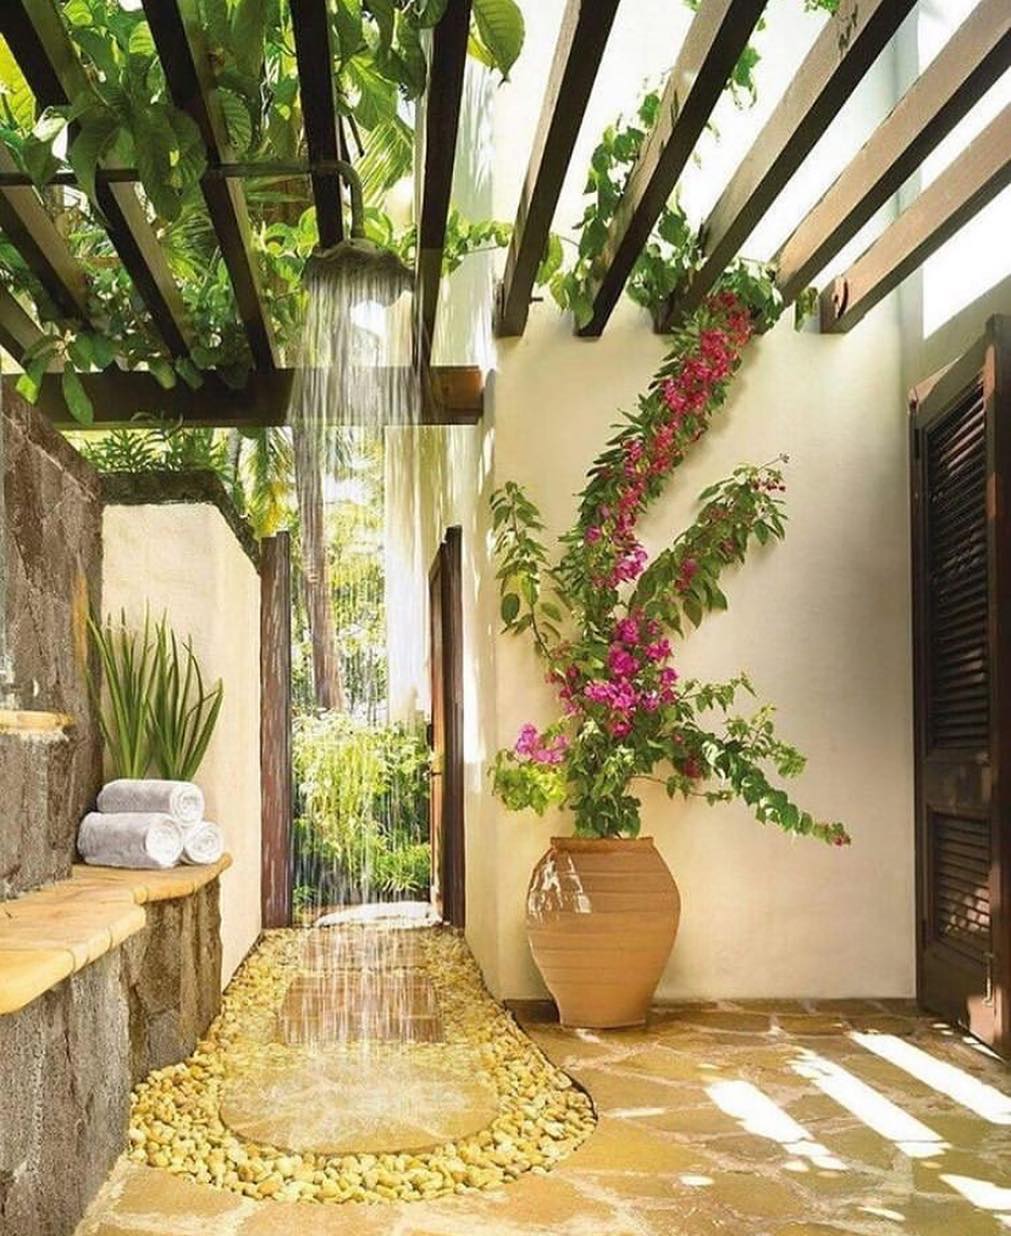 22 outdoor shower ideas